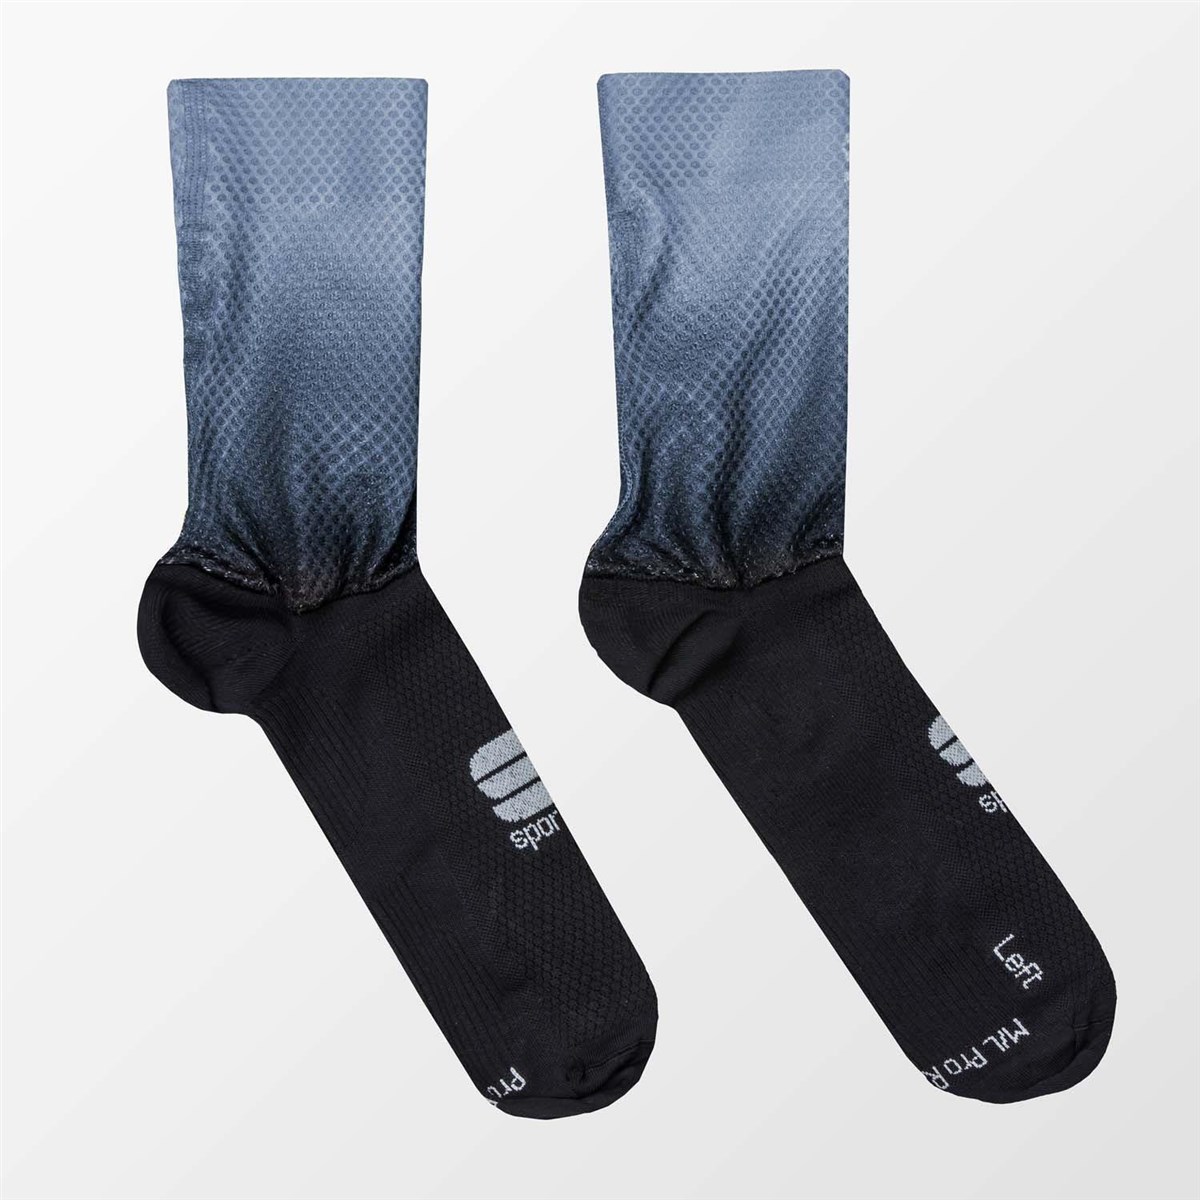 Sportful Race Mid Socks product image